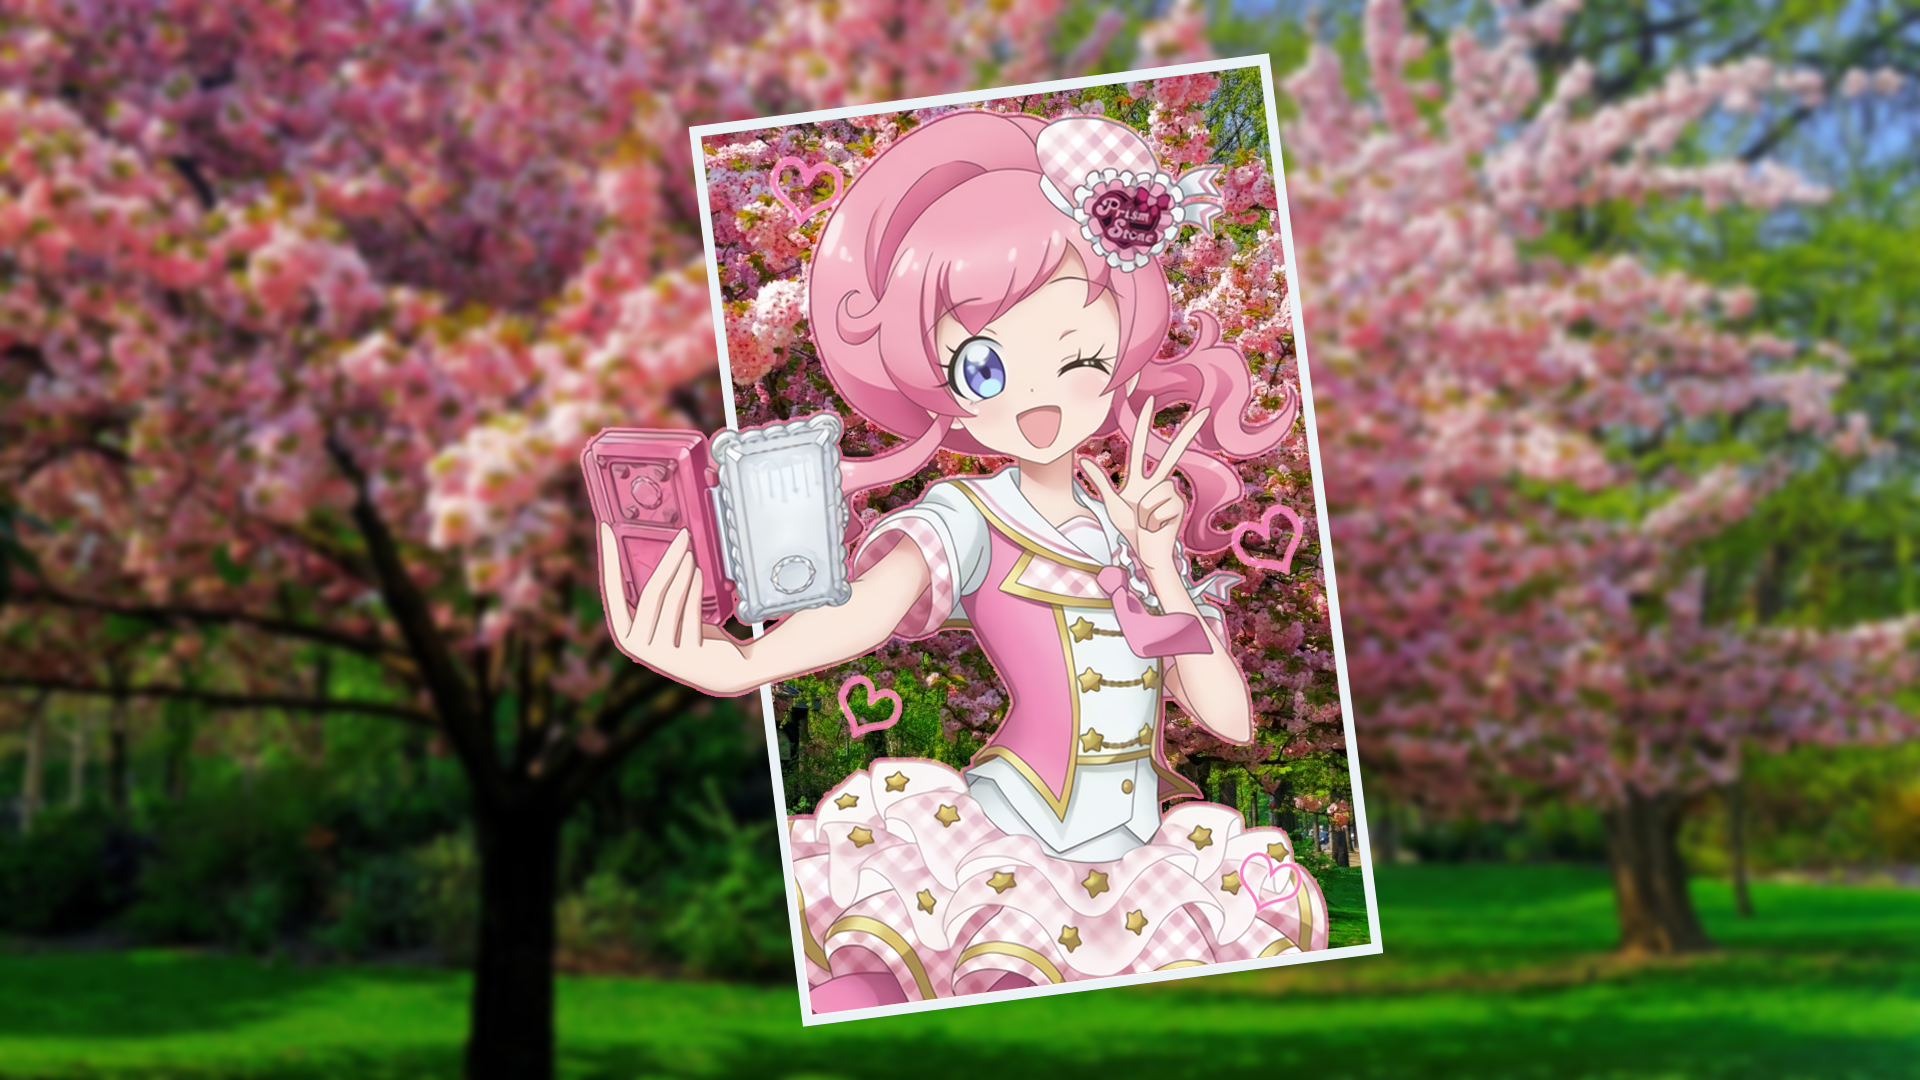 Anime 1920x1080 cherry blossom heart (design) picture-in-picture